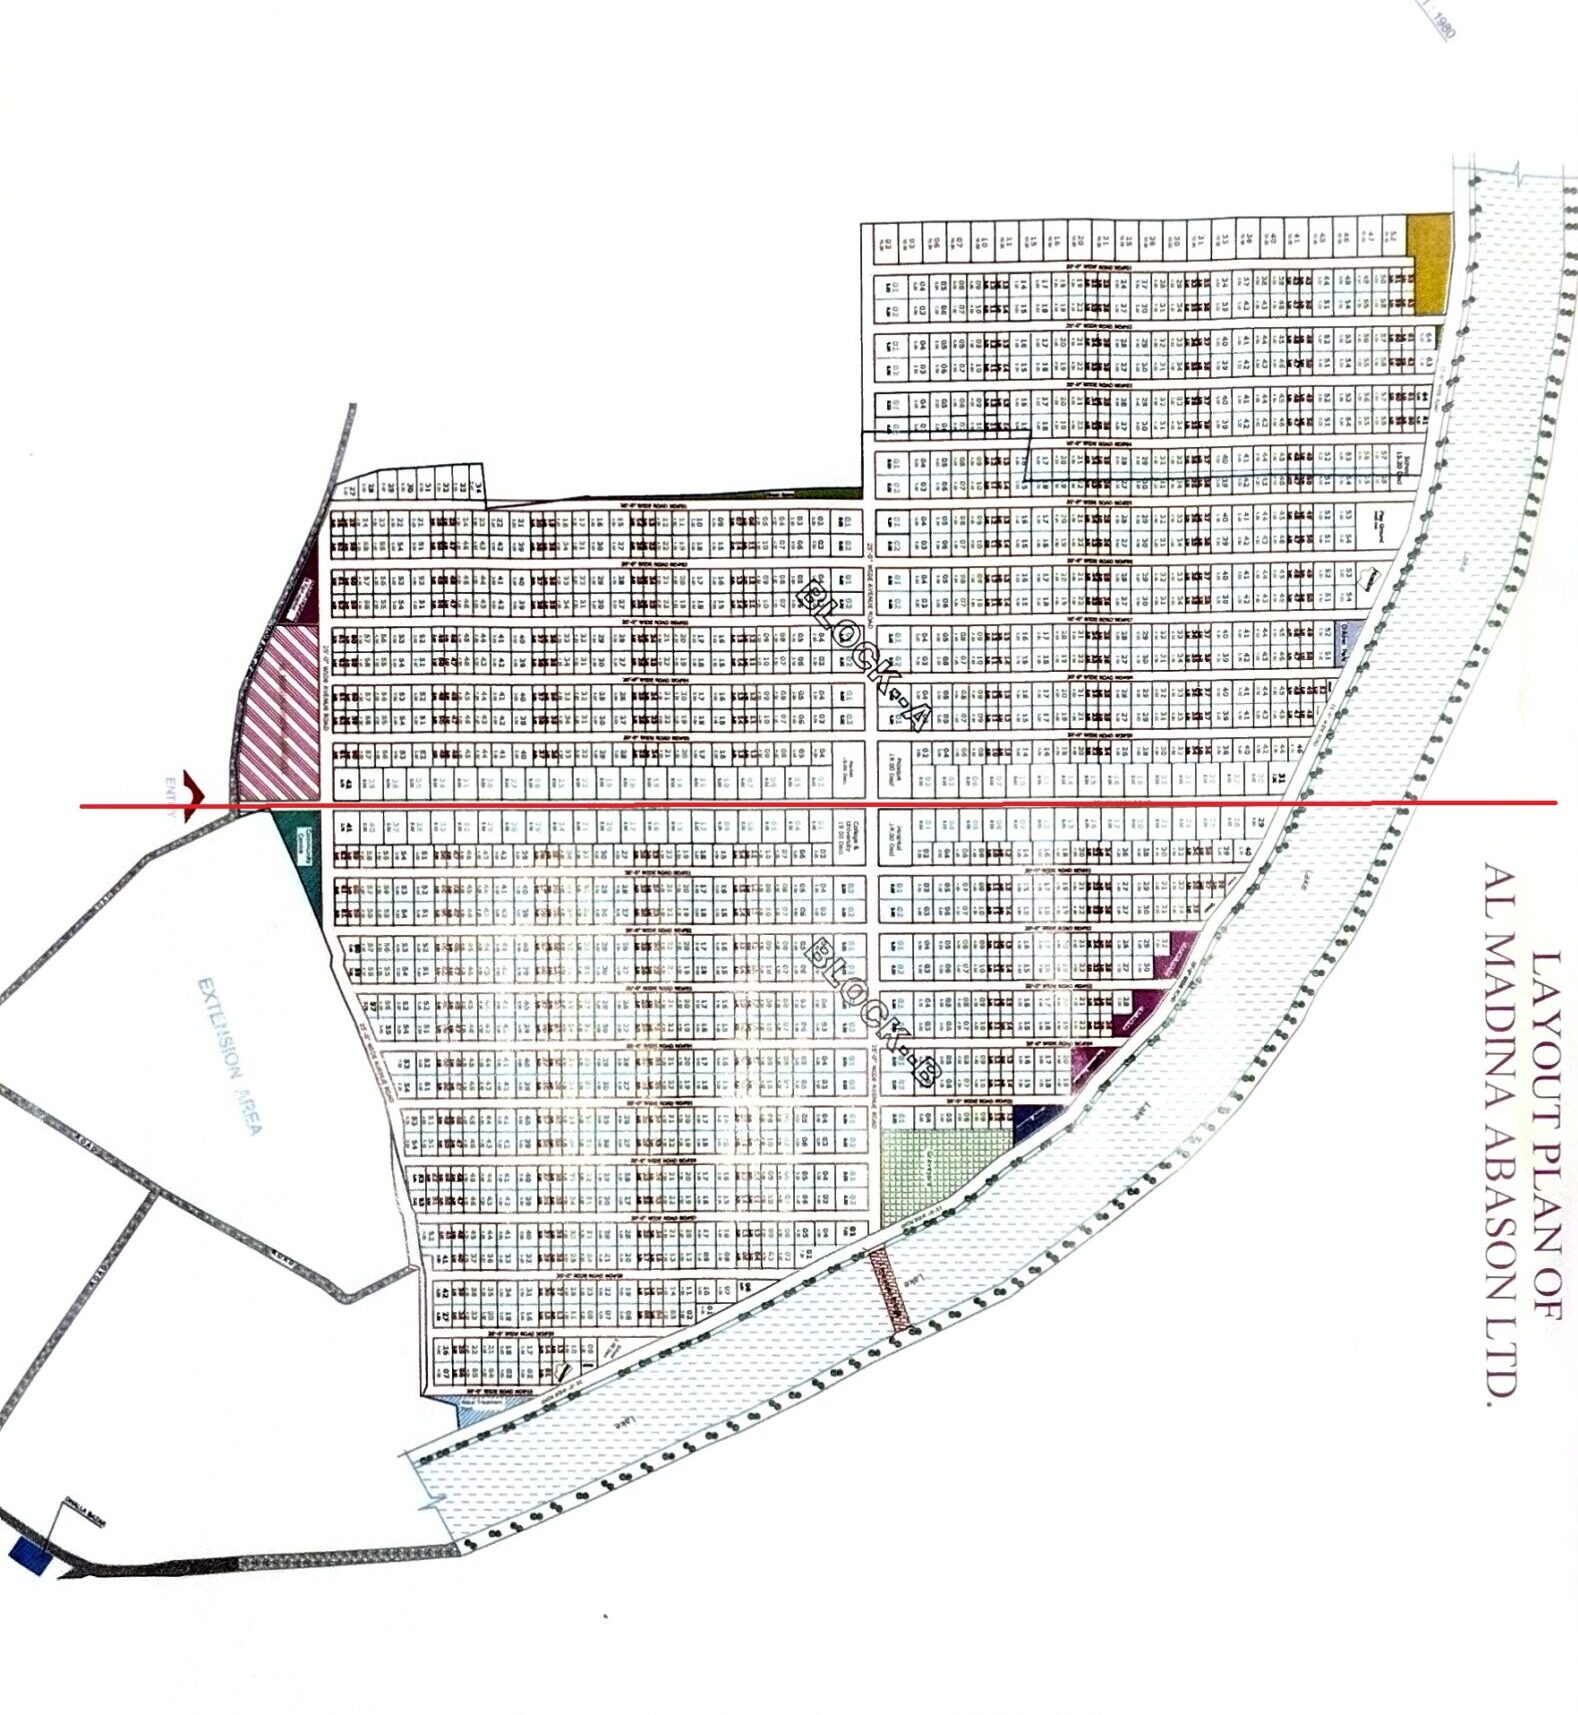 Almadina housing location layout